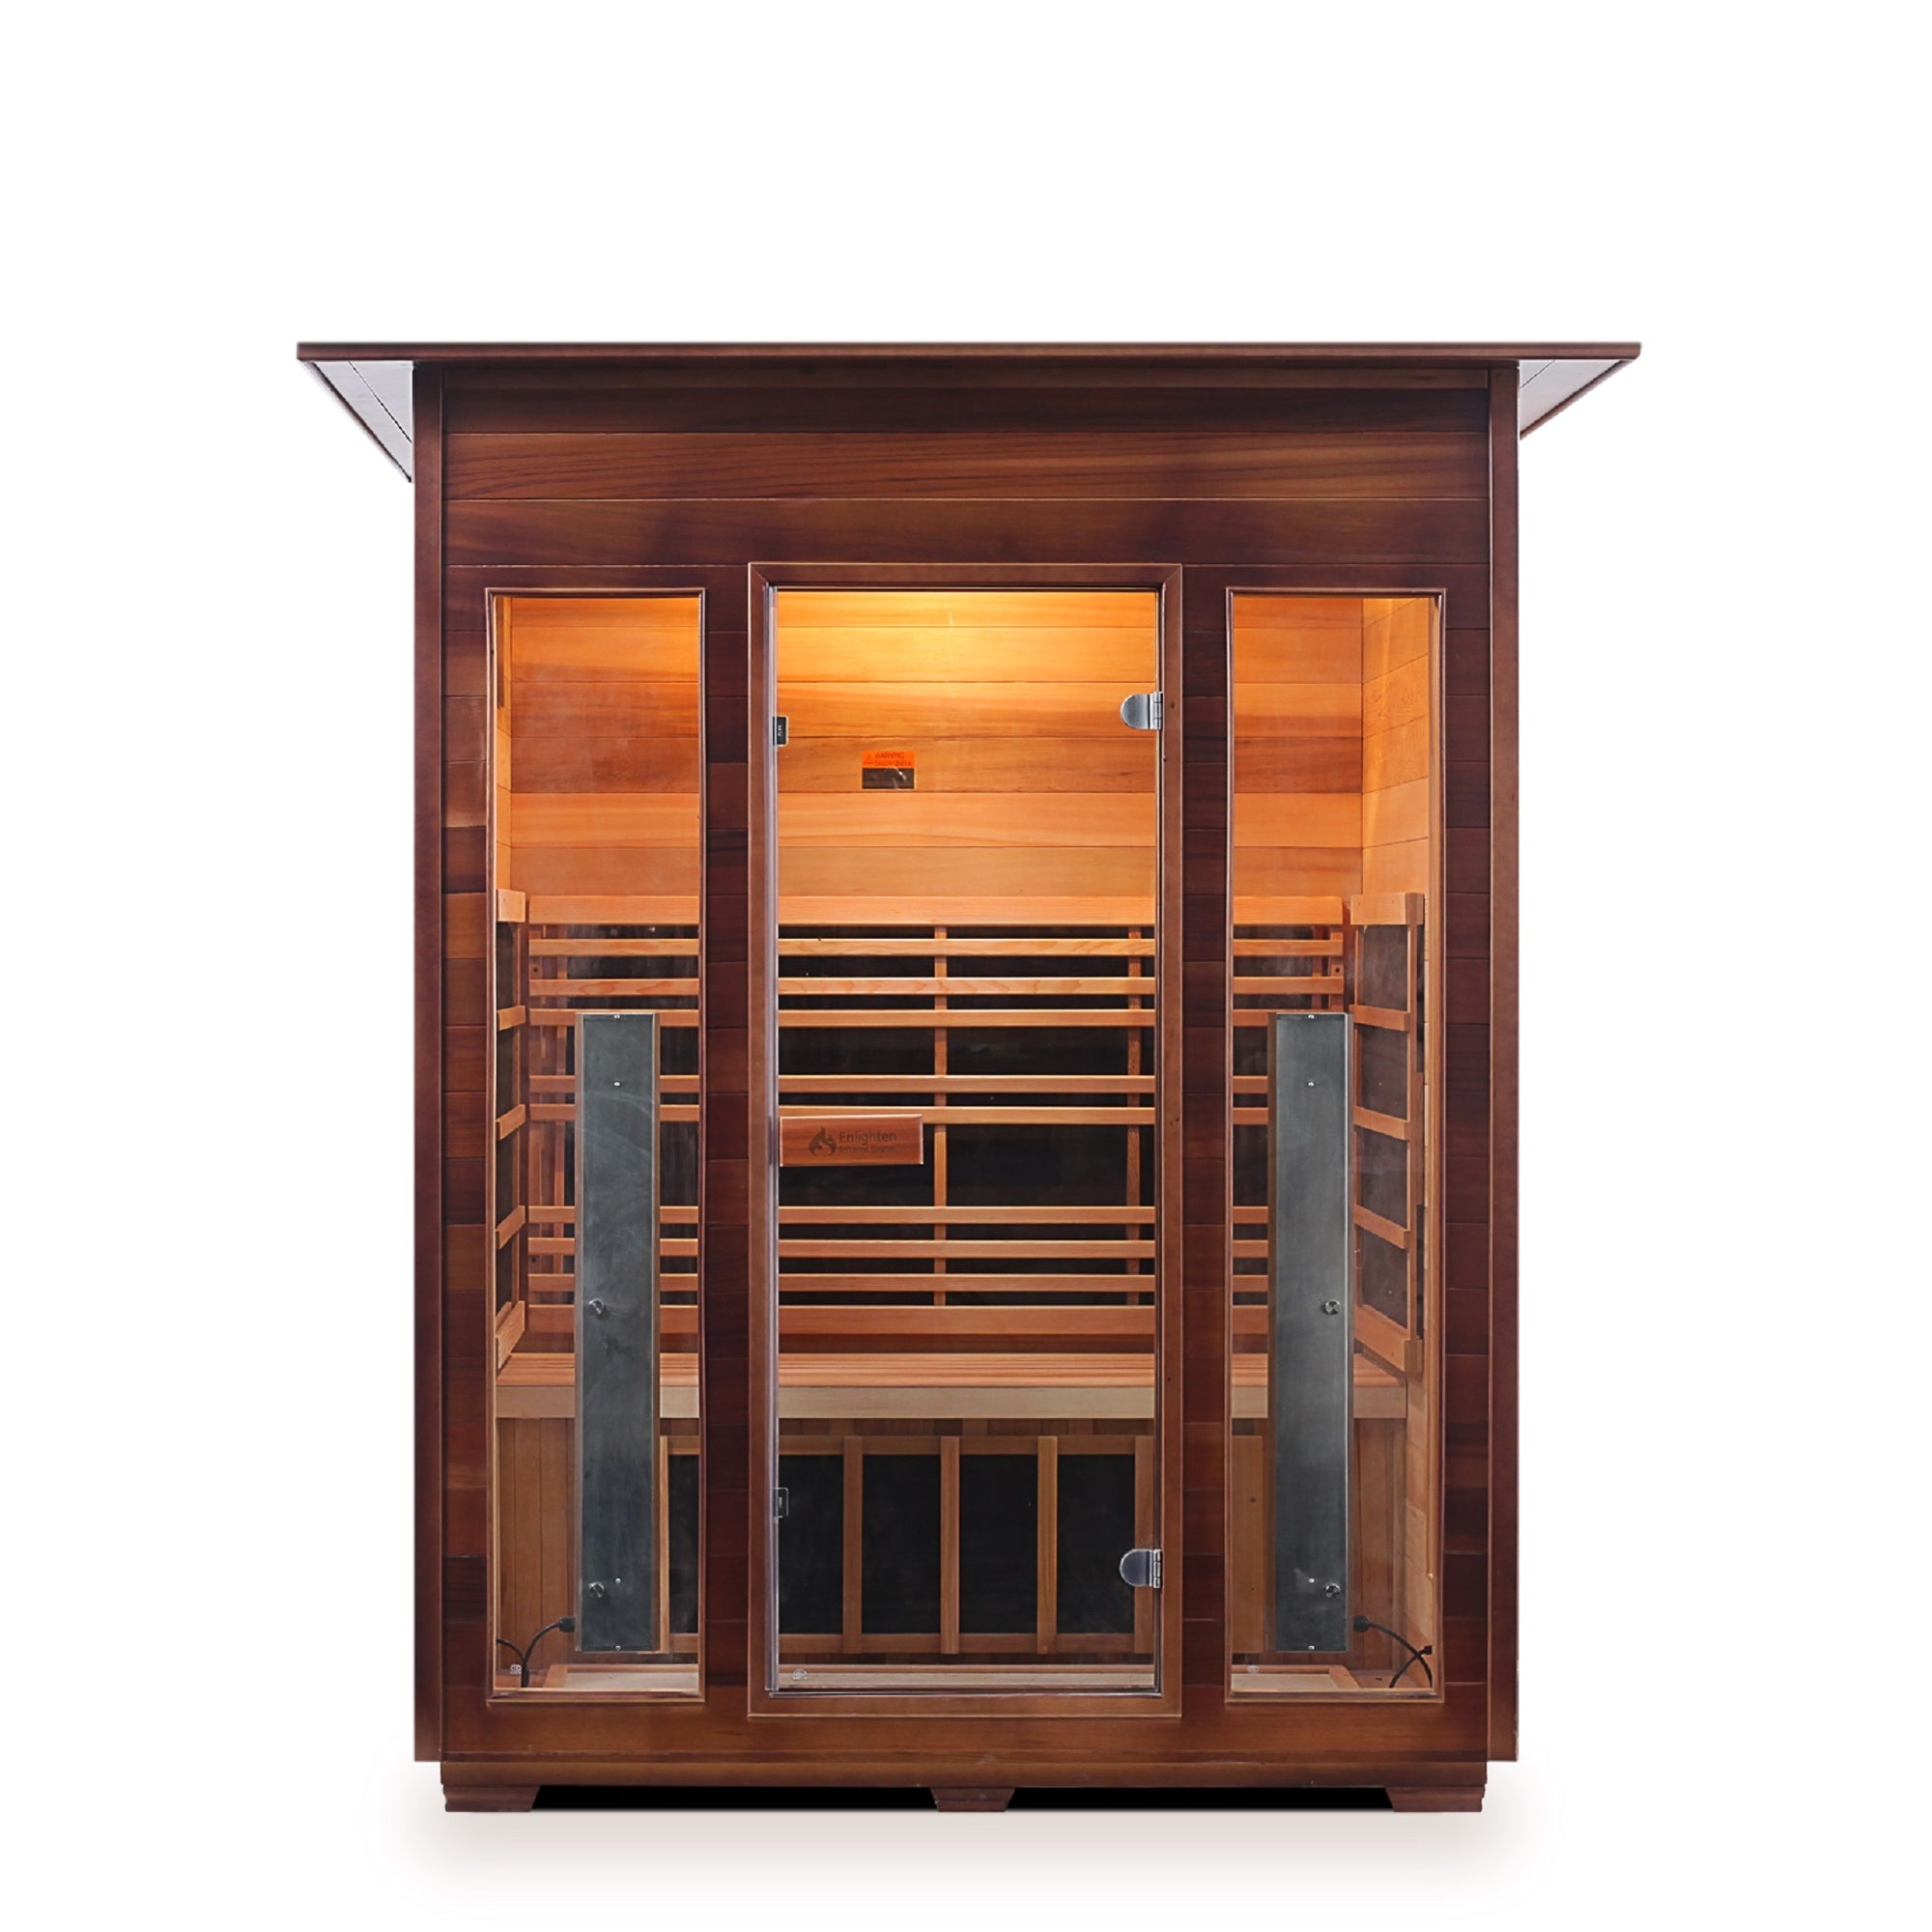 InfraNature Original Rustic Infrared Sauna Canadian Cedarwood  indoor roof with glass door and windows front view